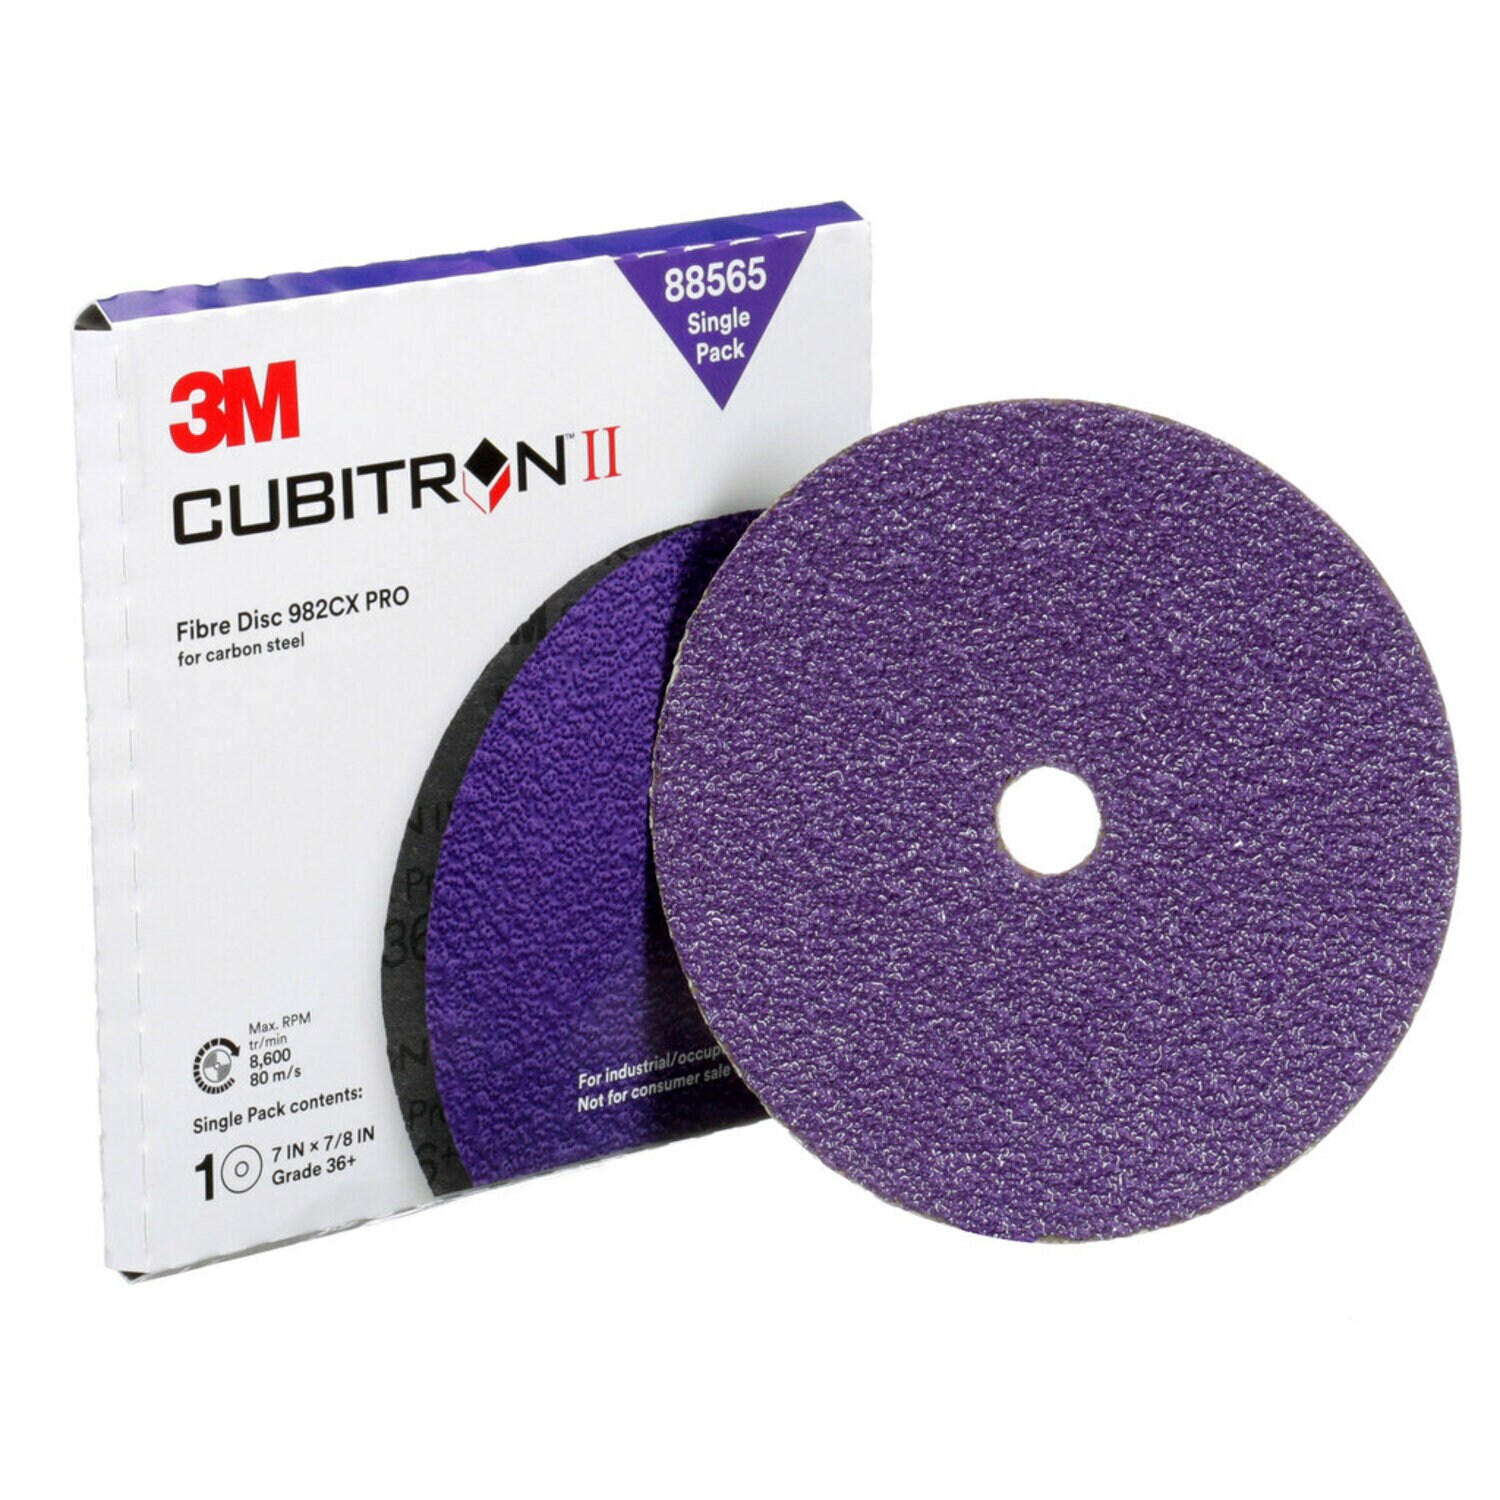 7100253451 - 3M Cubitron II Fibre Disc 982CX Pro, 36+, 4-1/2 in x 7/8 in, Die 450E,
Single Pack, 10 ea/Case